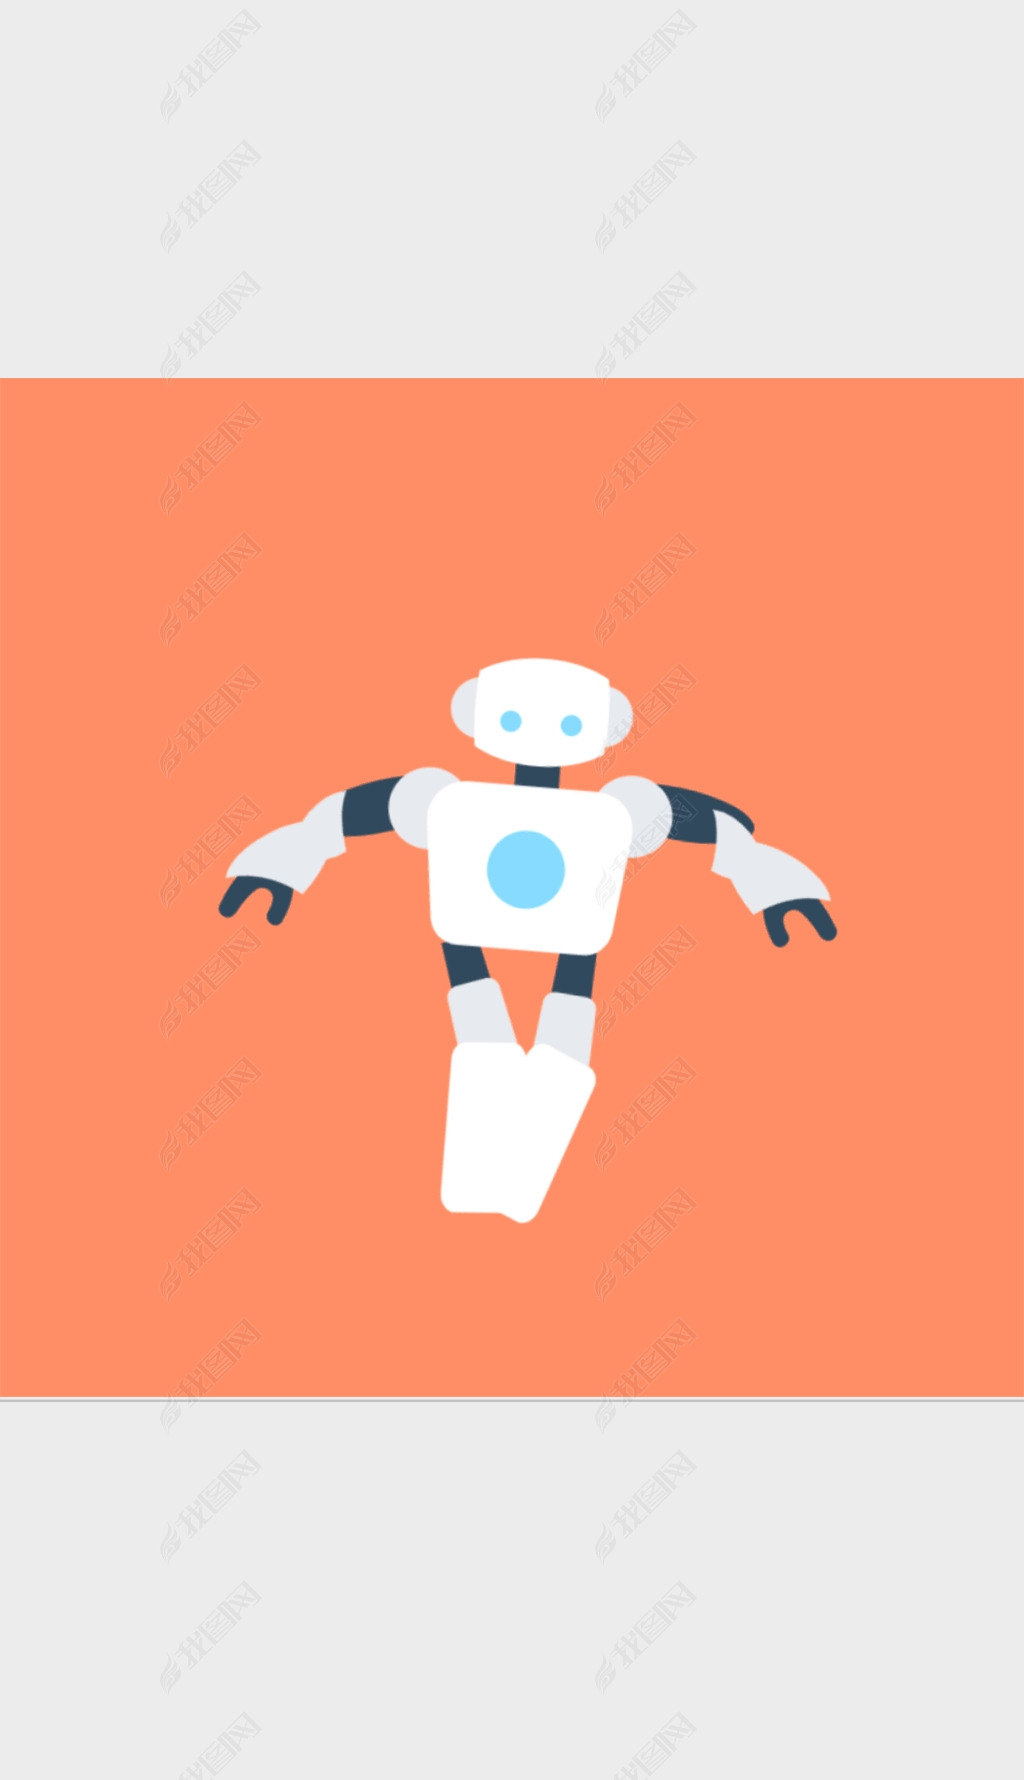 һ--Another dancing robot